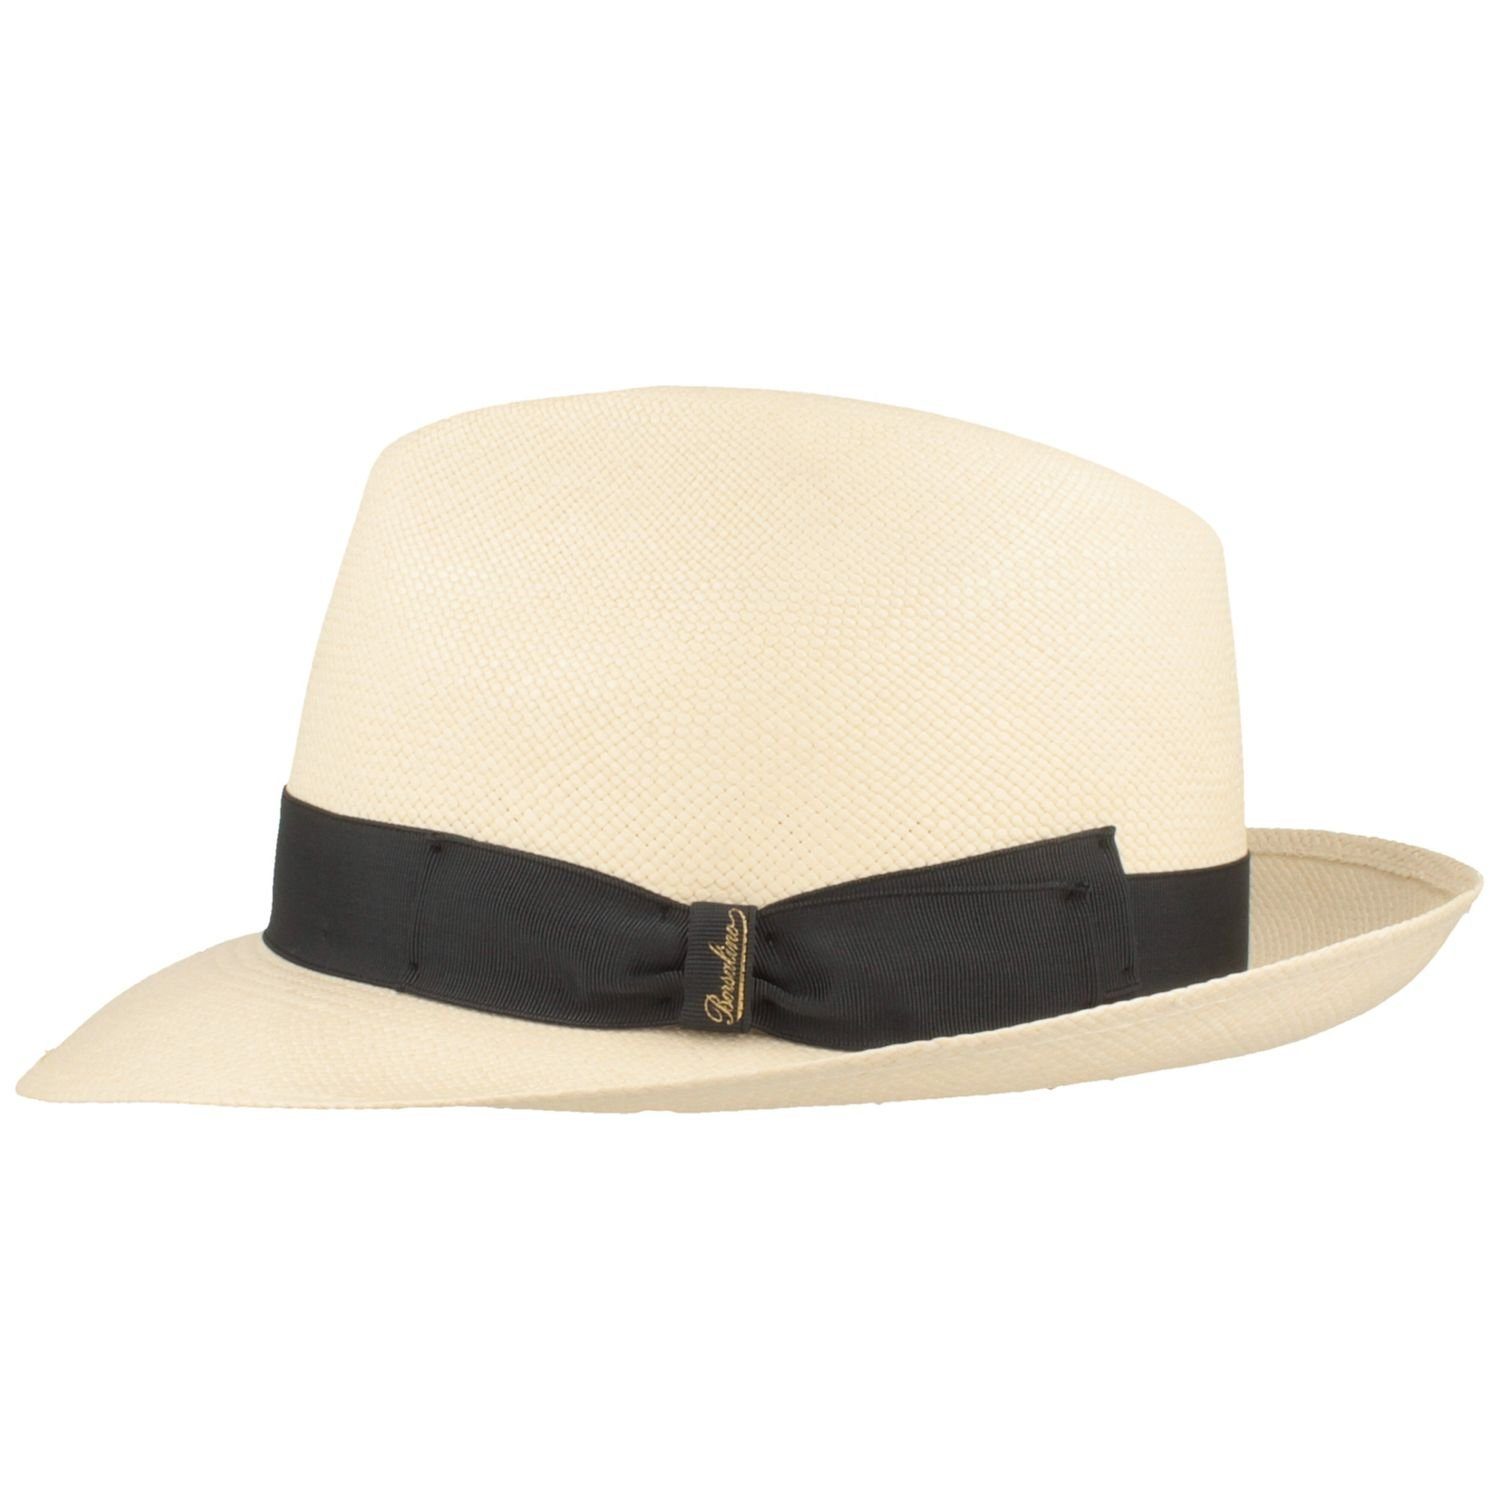 Quito Panama hochwertiger Hut handgeflochtener rauchblau natur/Bd. Strohhut Borsalino 7580